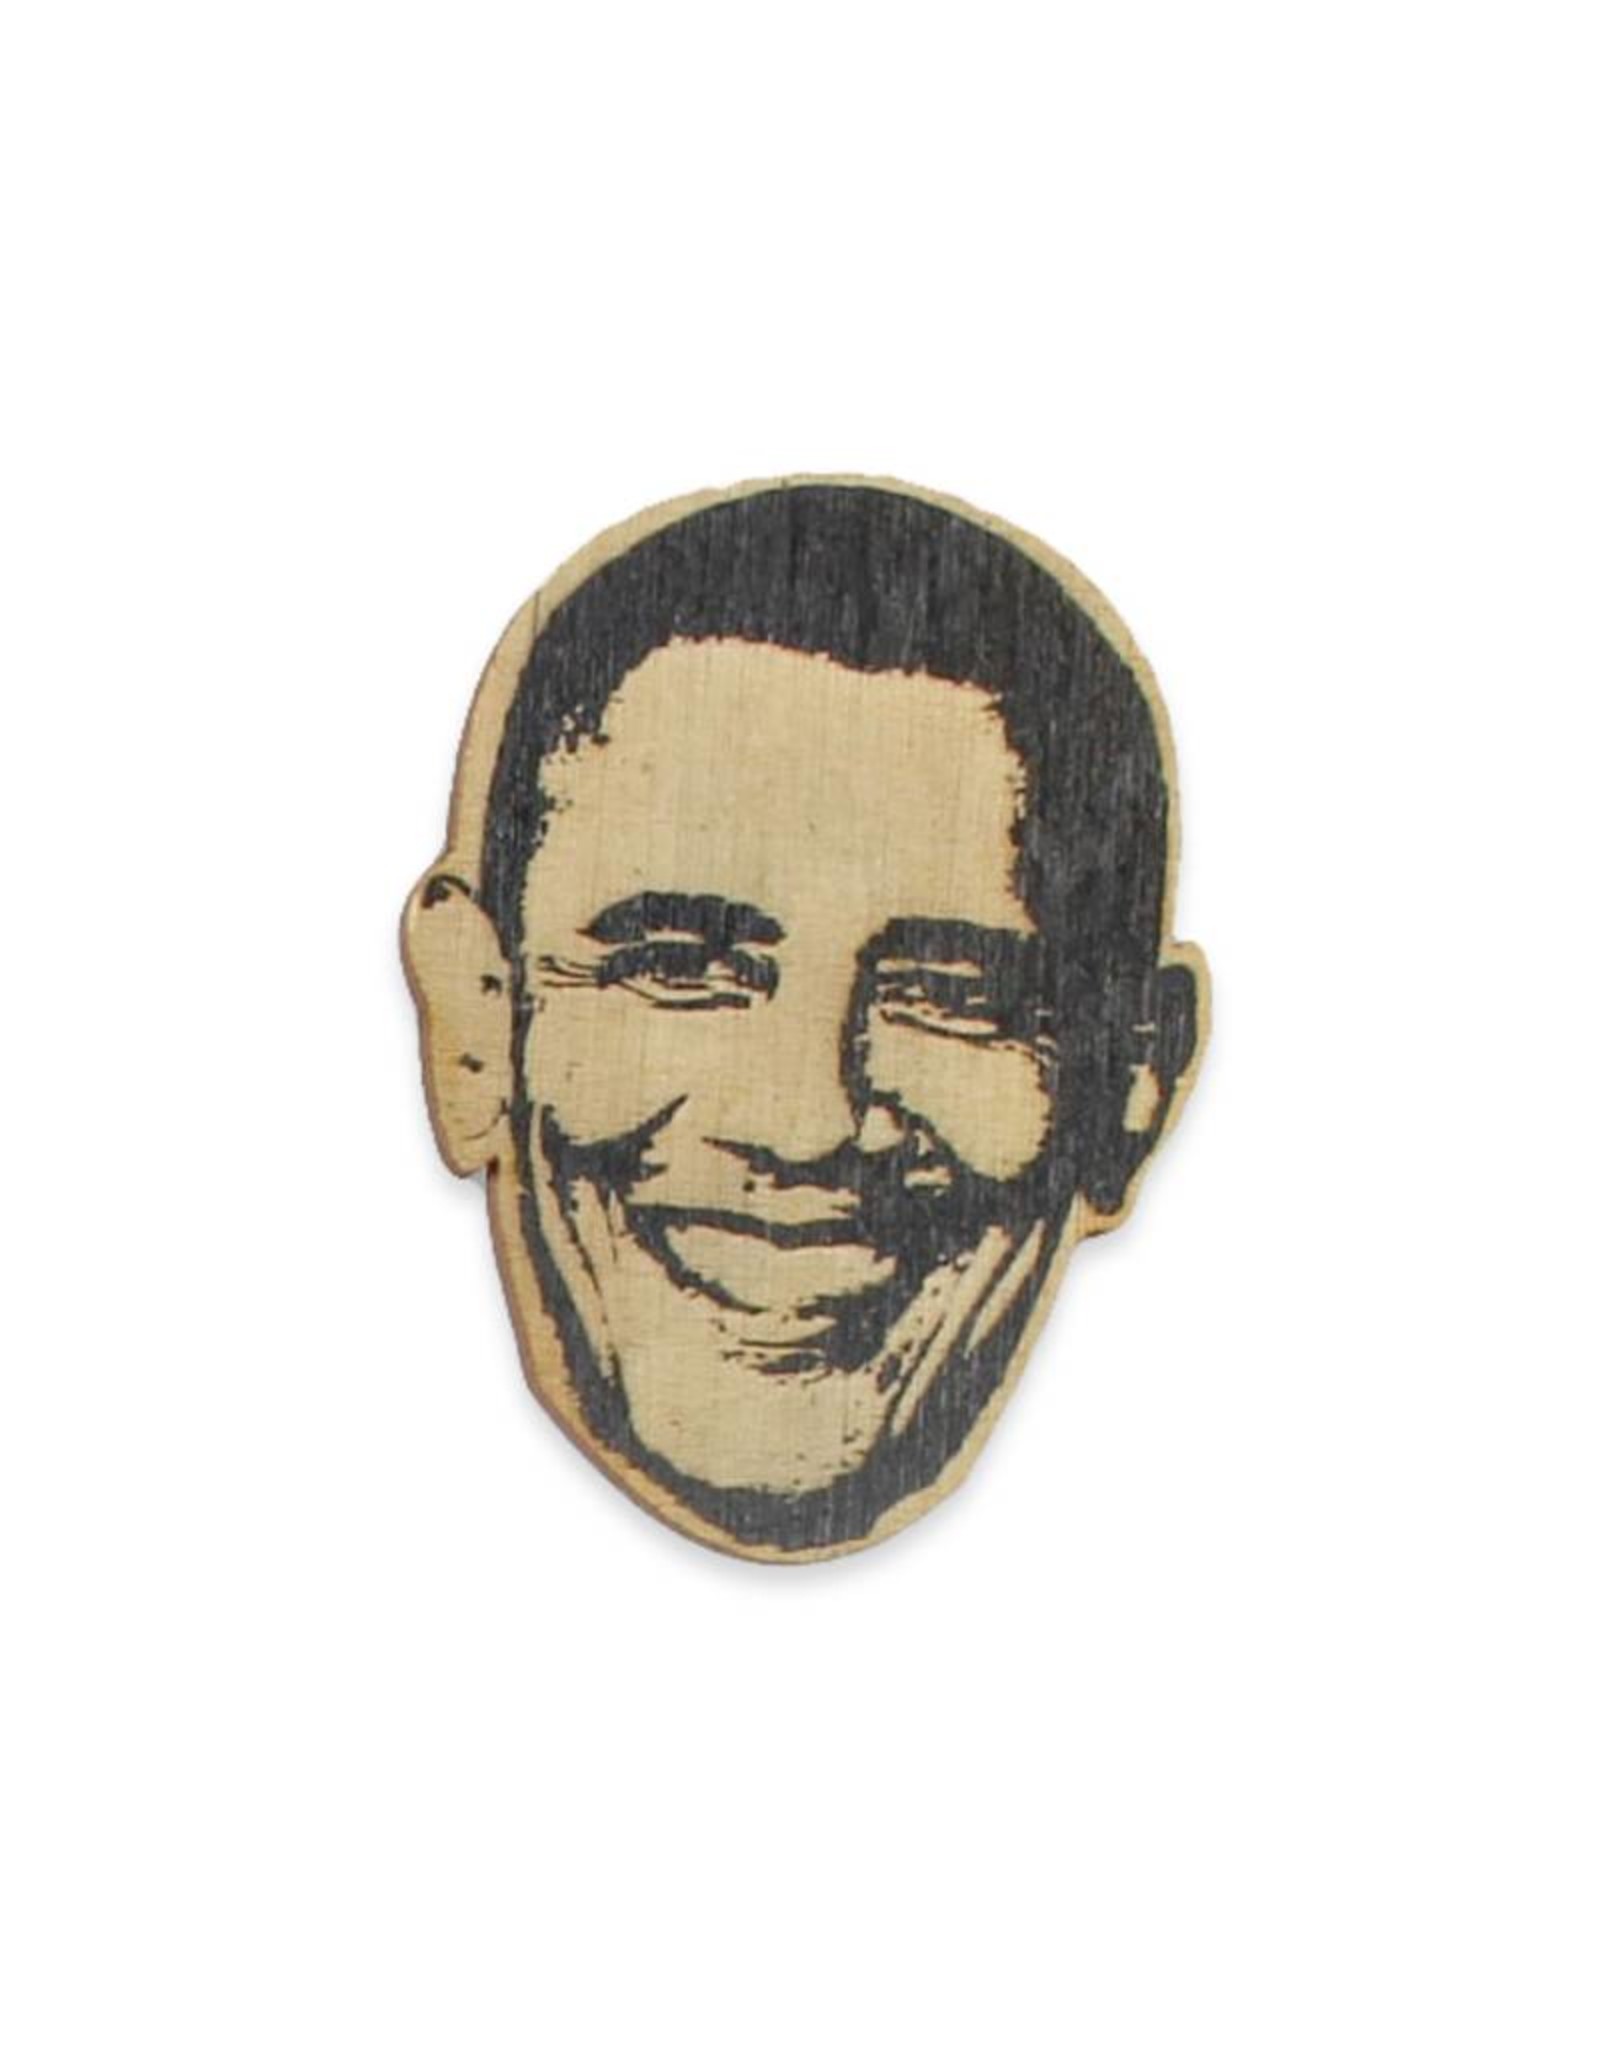 Barack Obama Wooden Pin